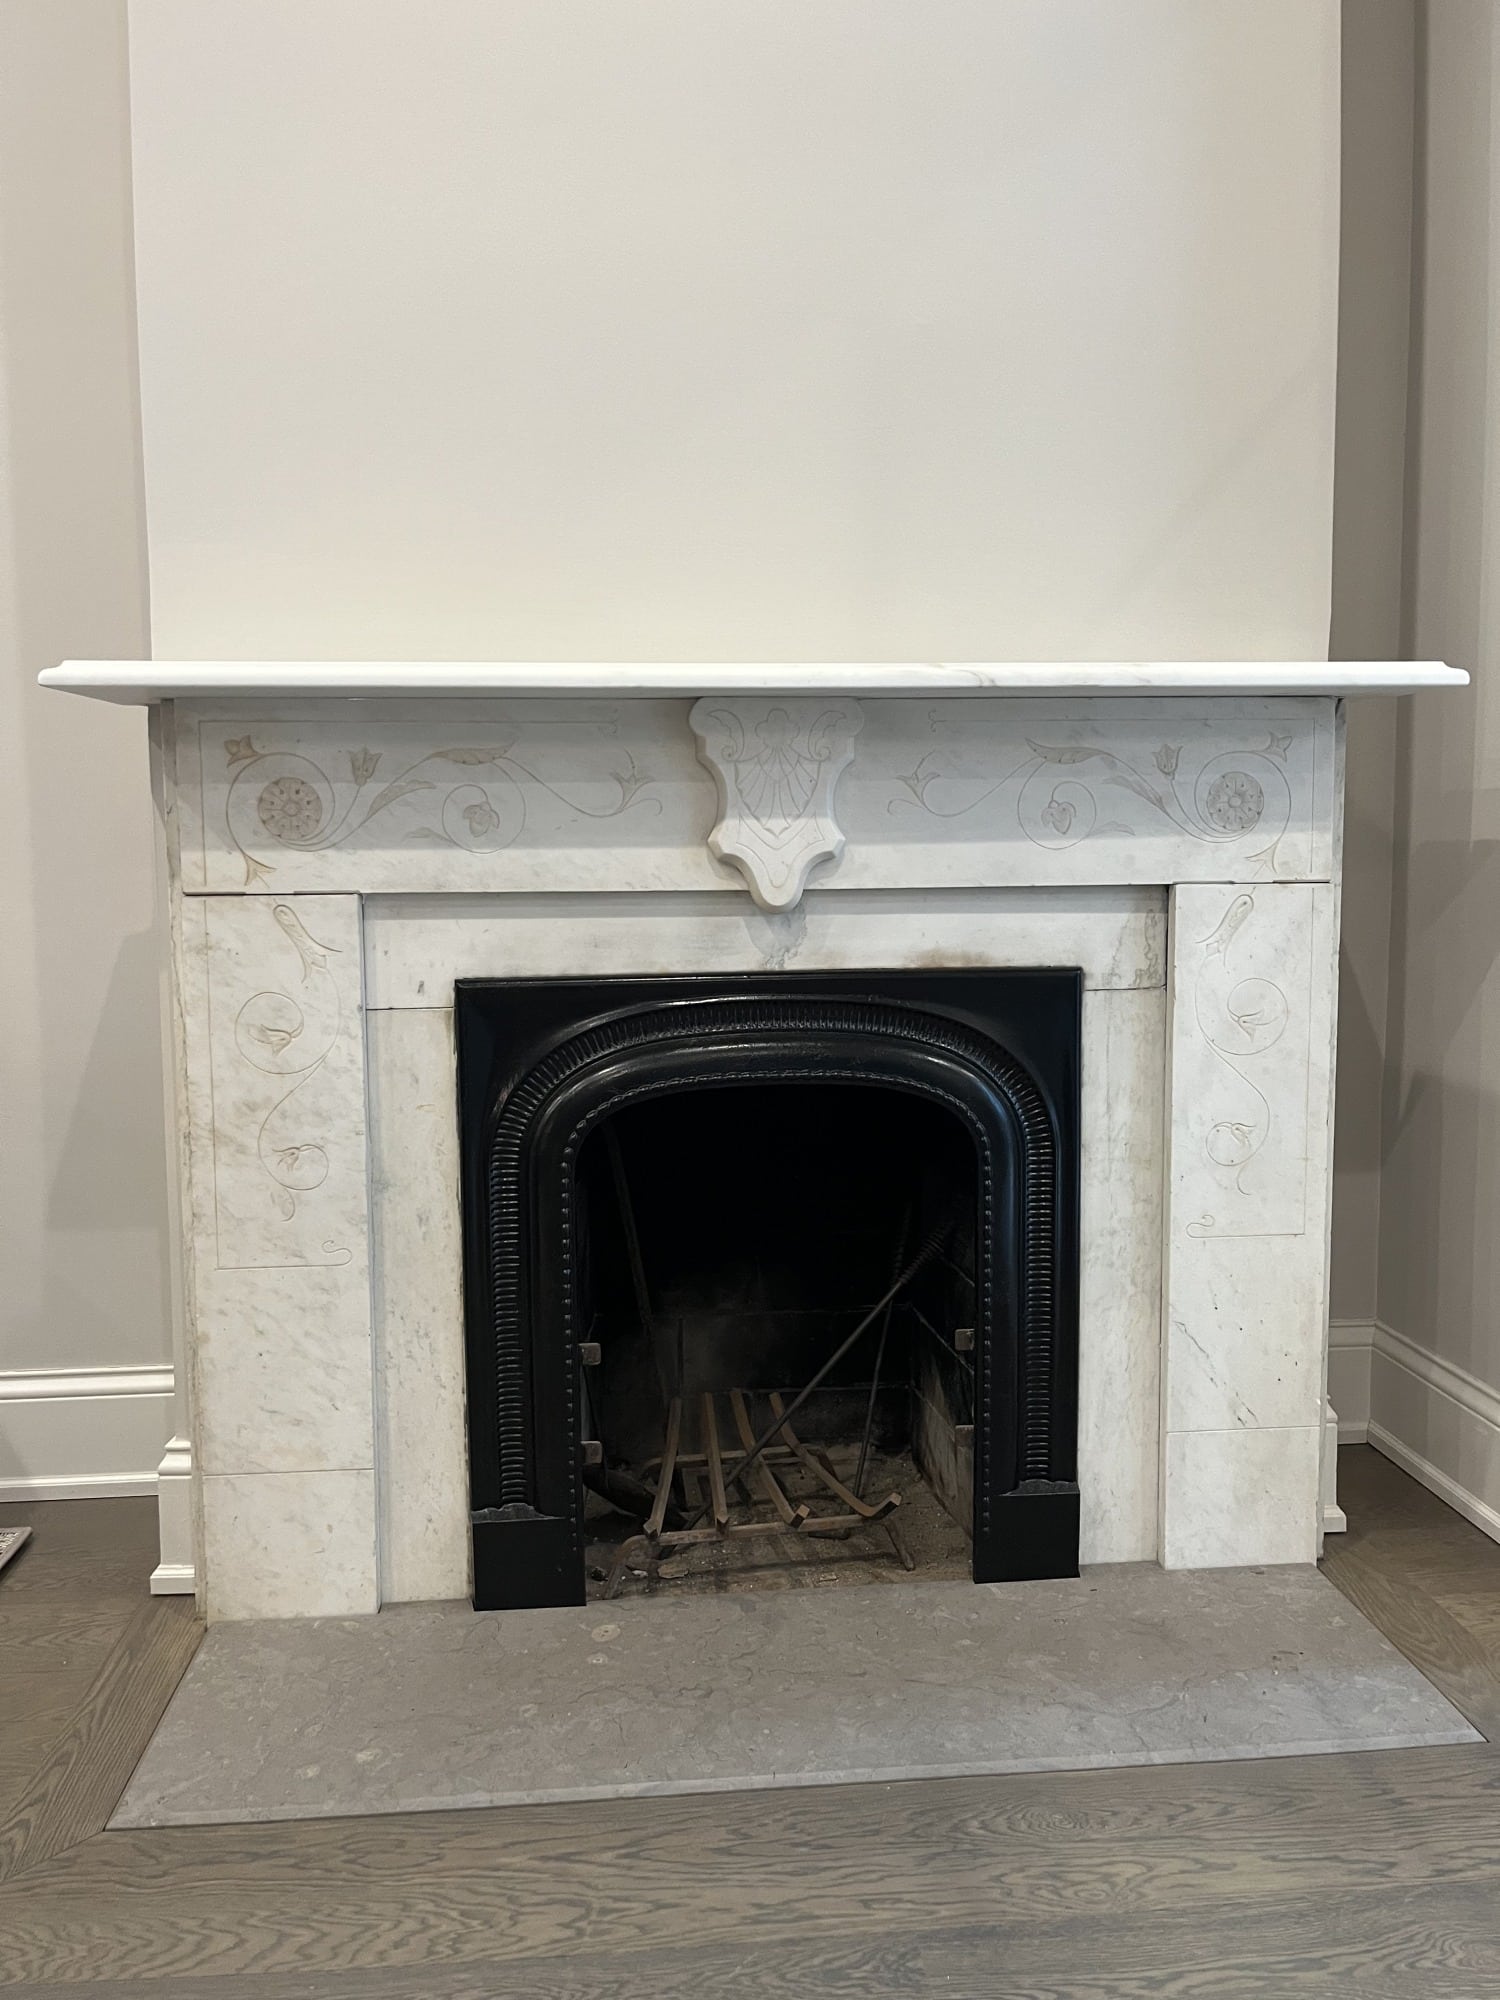 Restored original fireplace